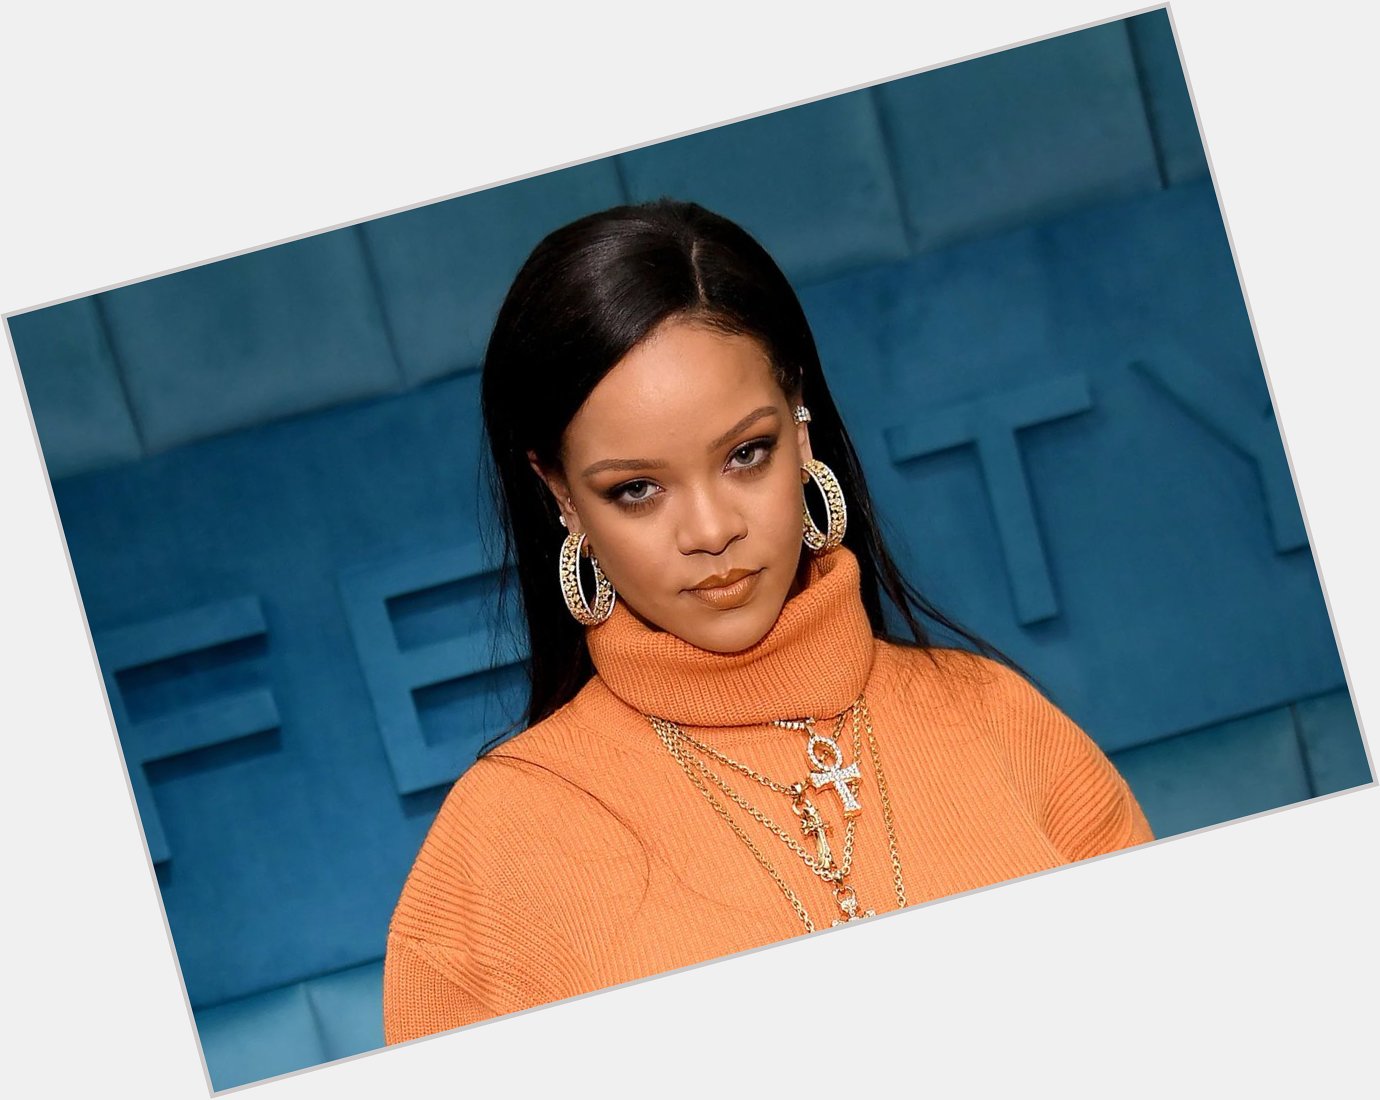 Happy Birthday to Rihanna She turns 33 years old today 